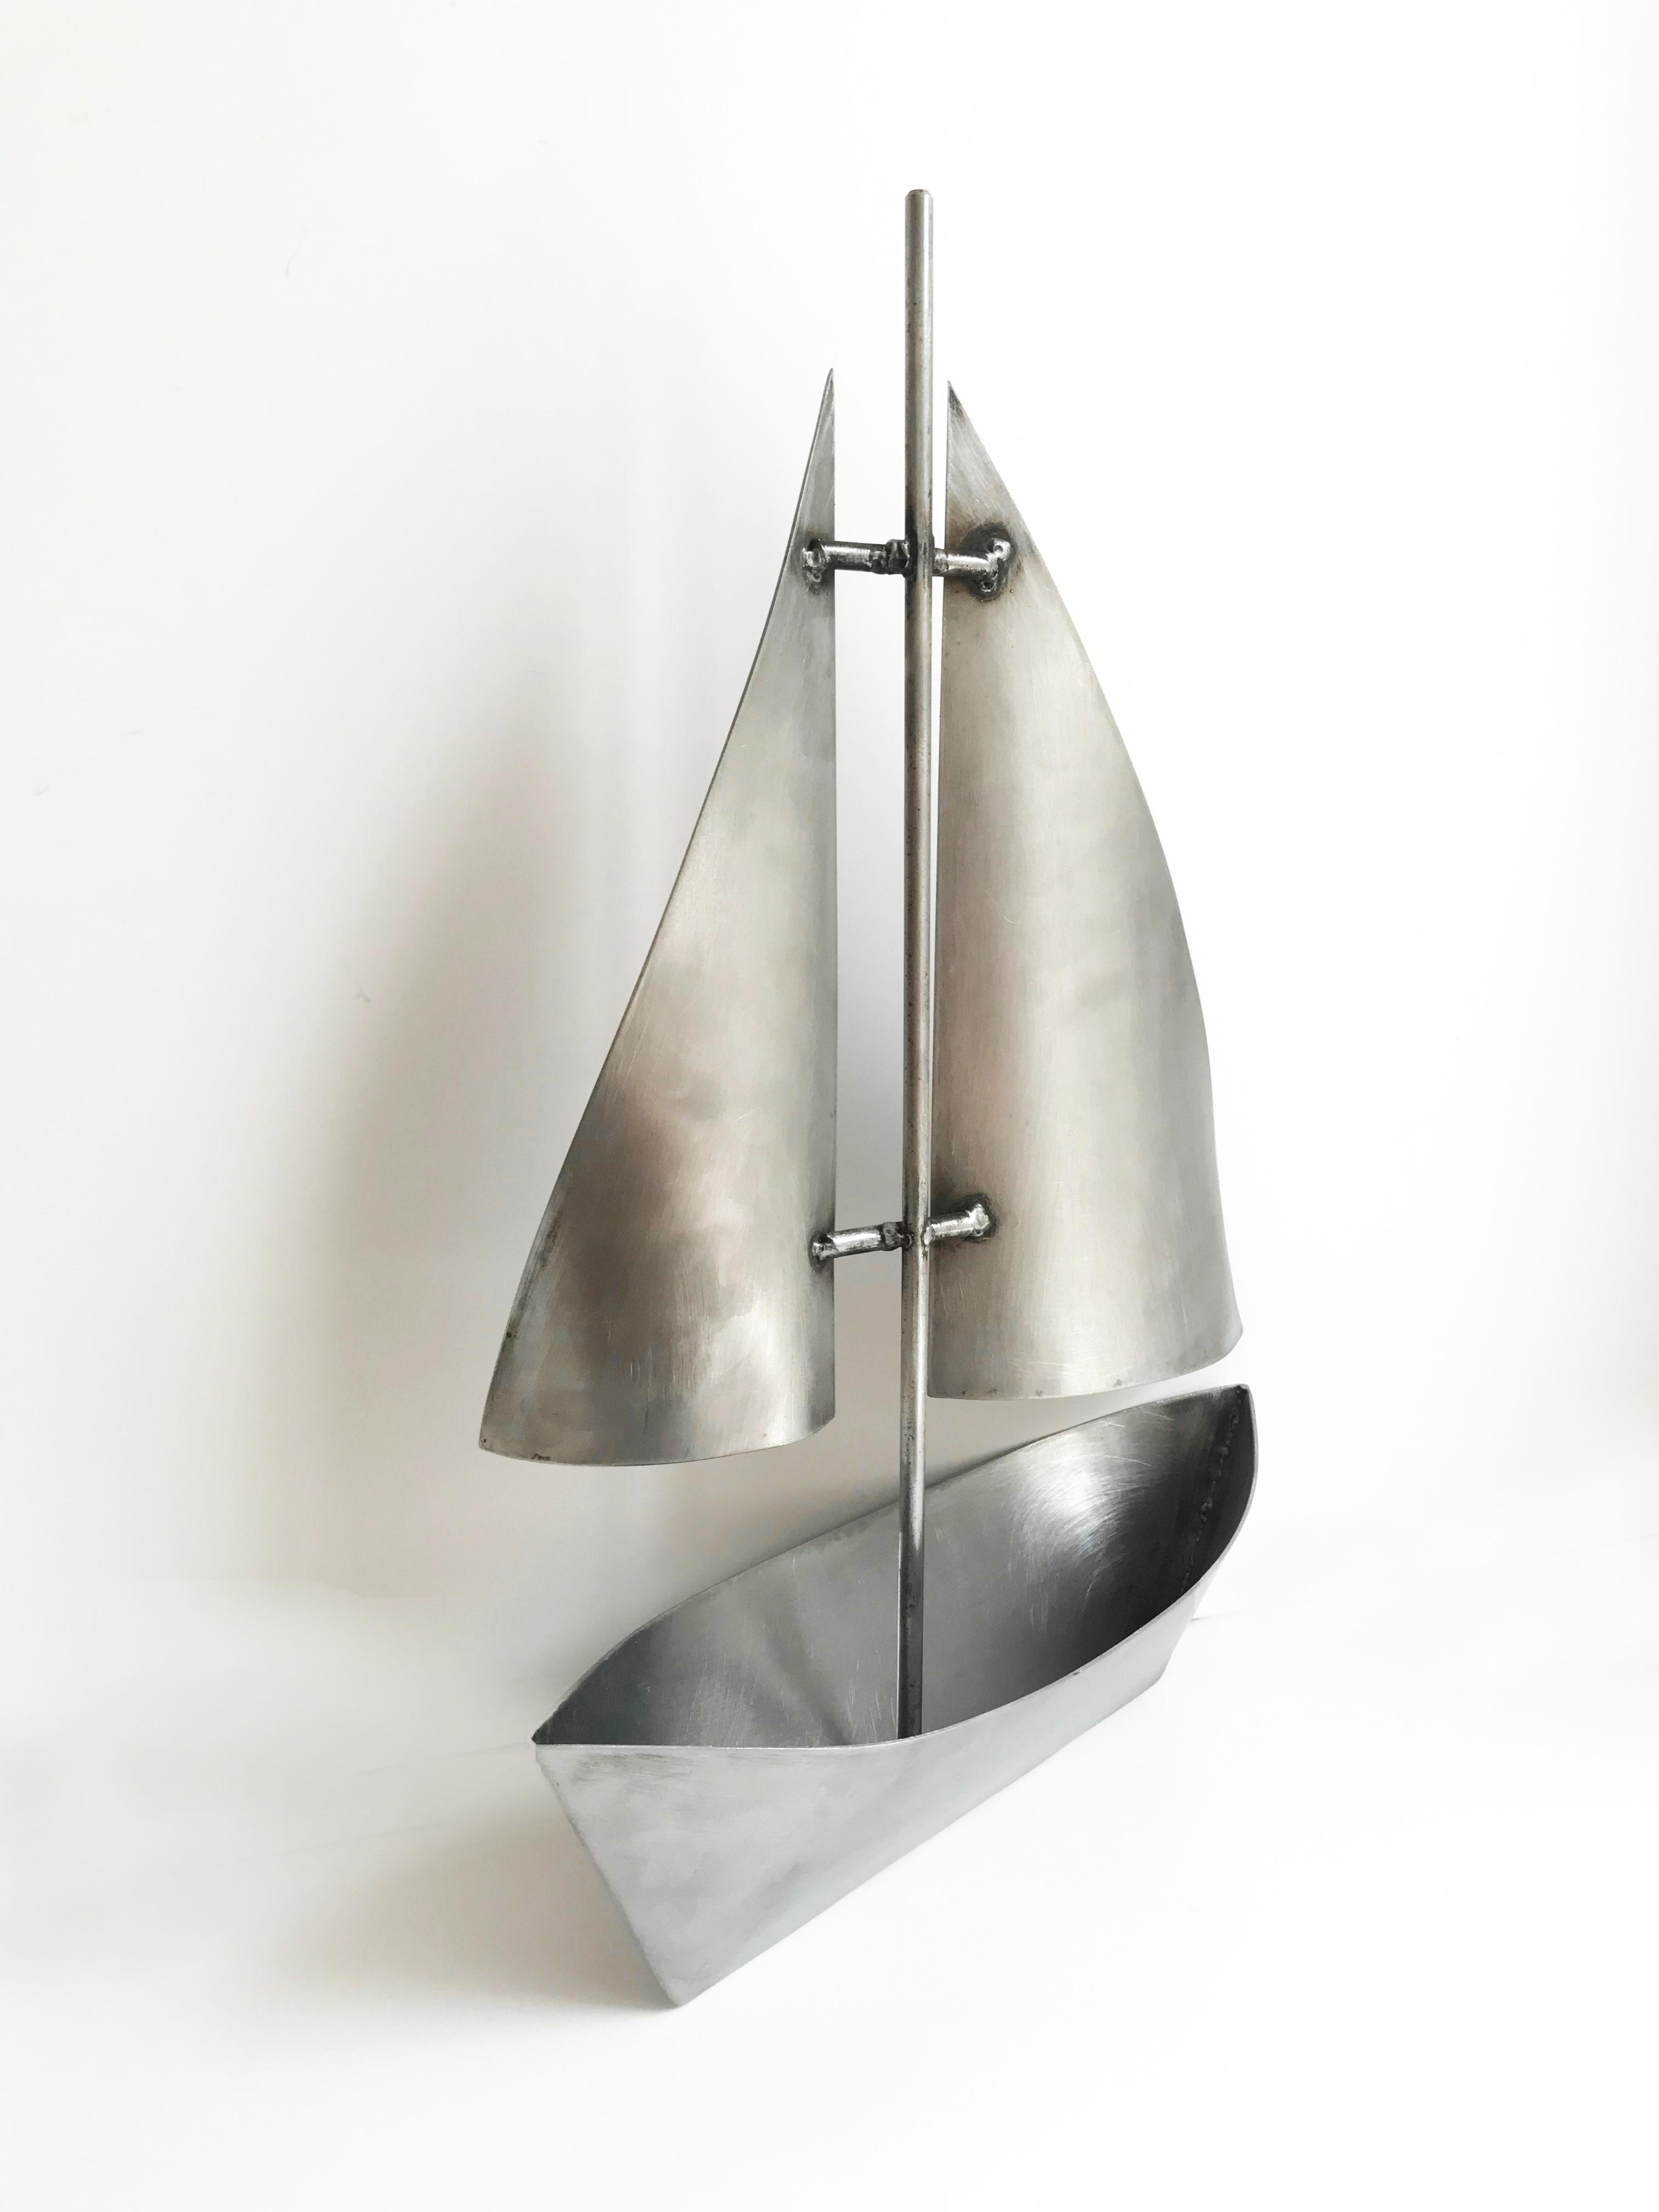 metal sailboat sculpture